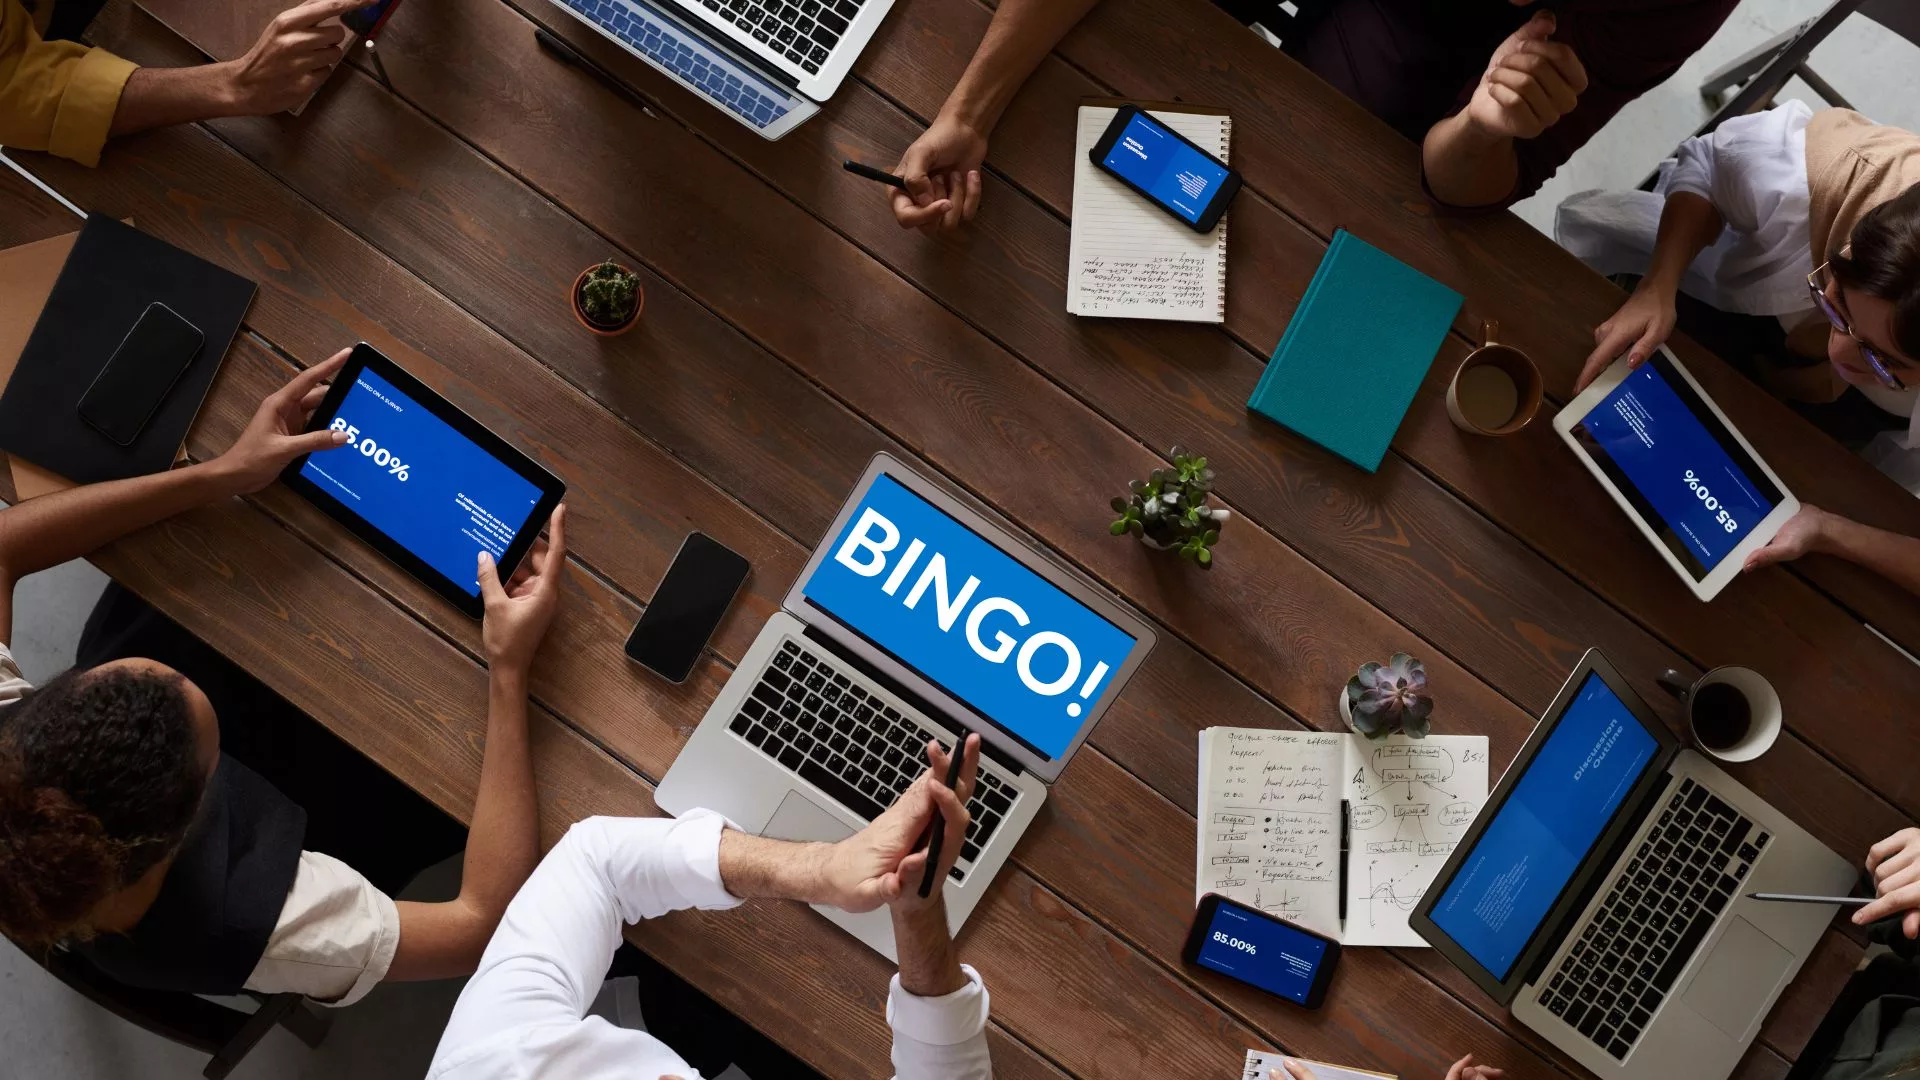 Bingo Game: Speaking in a meeting